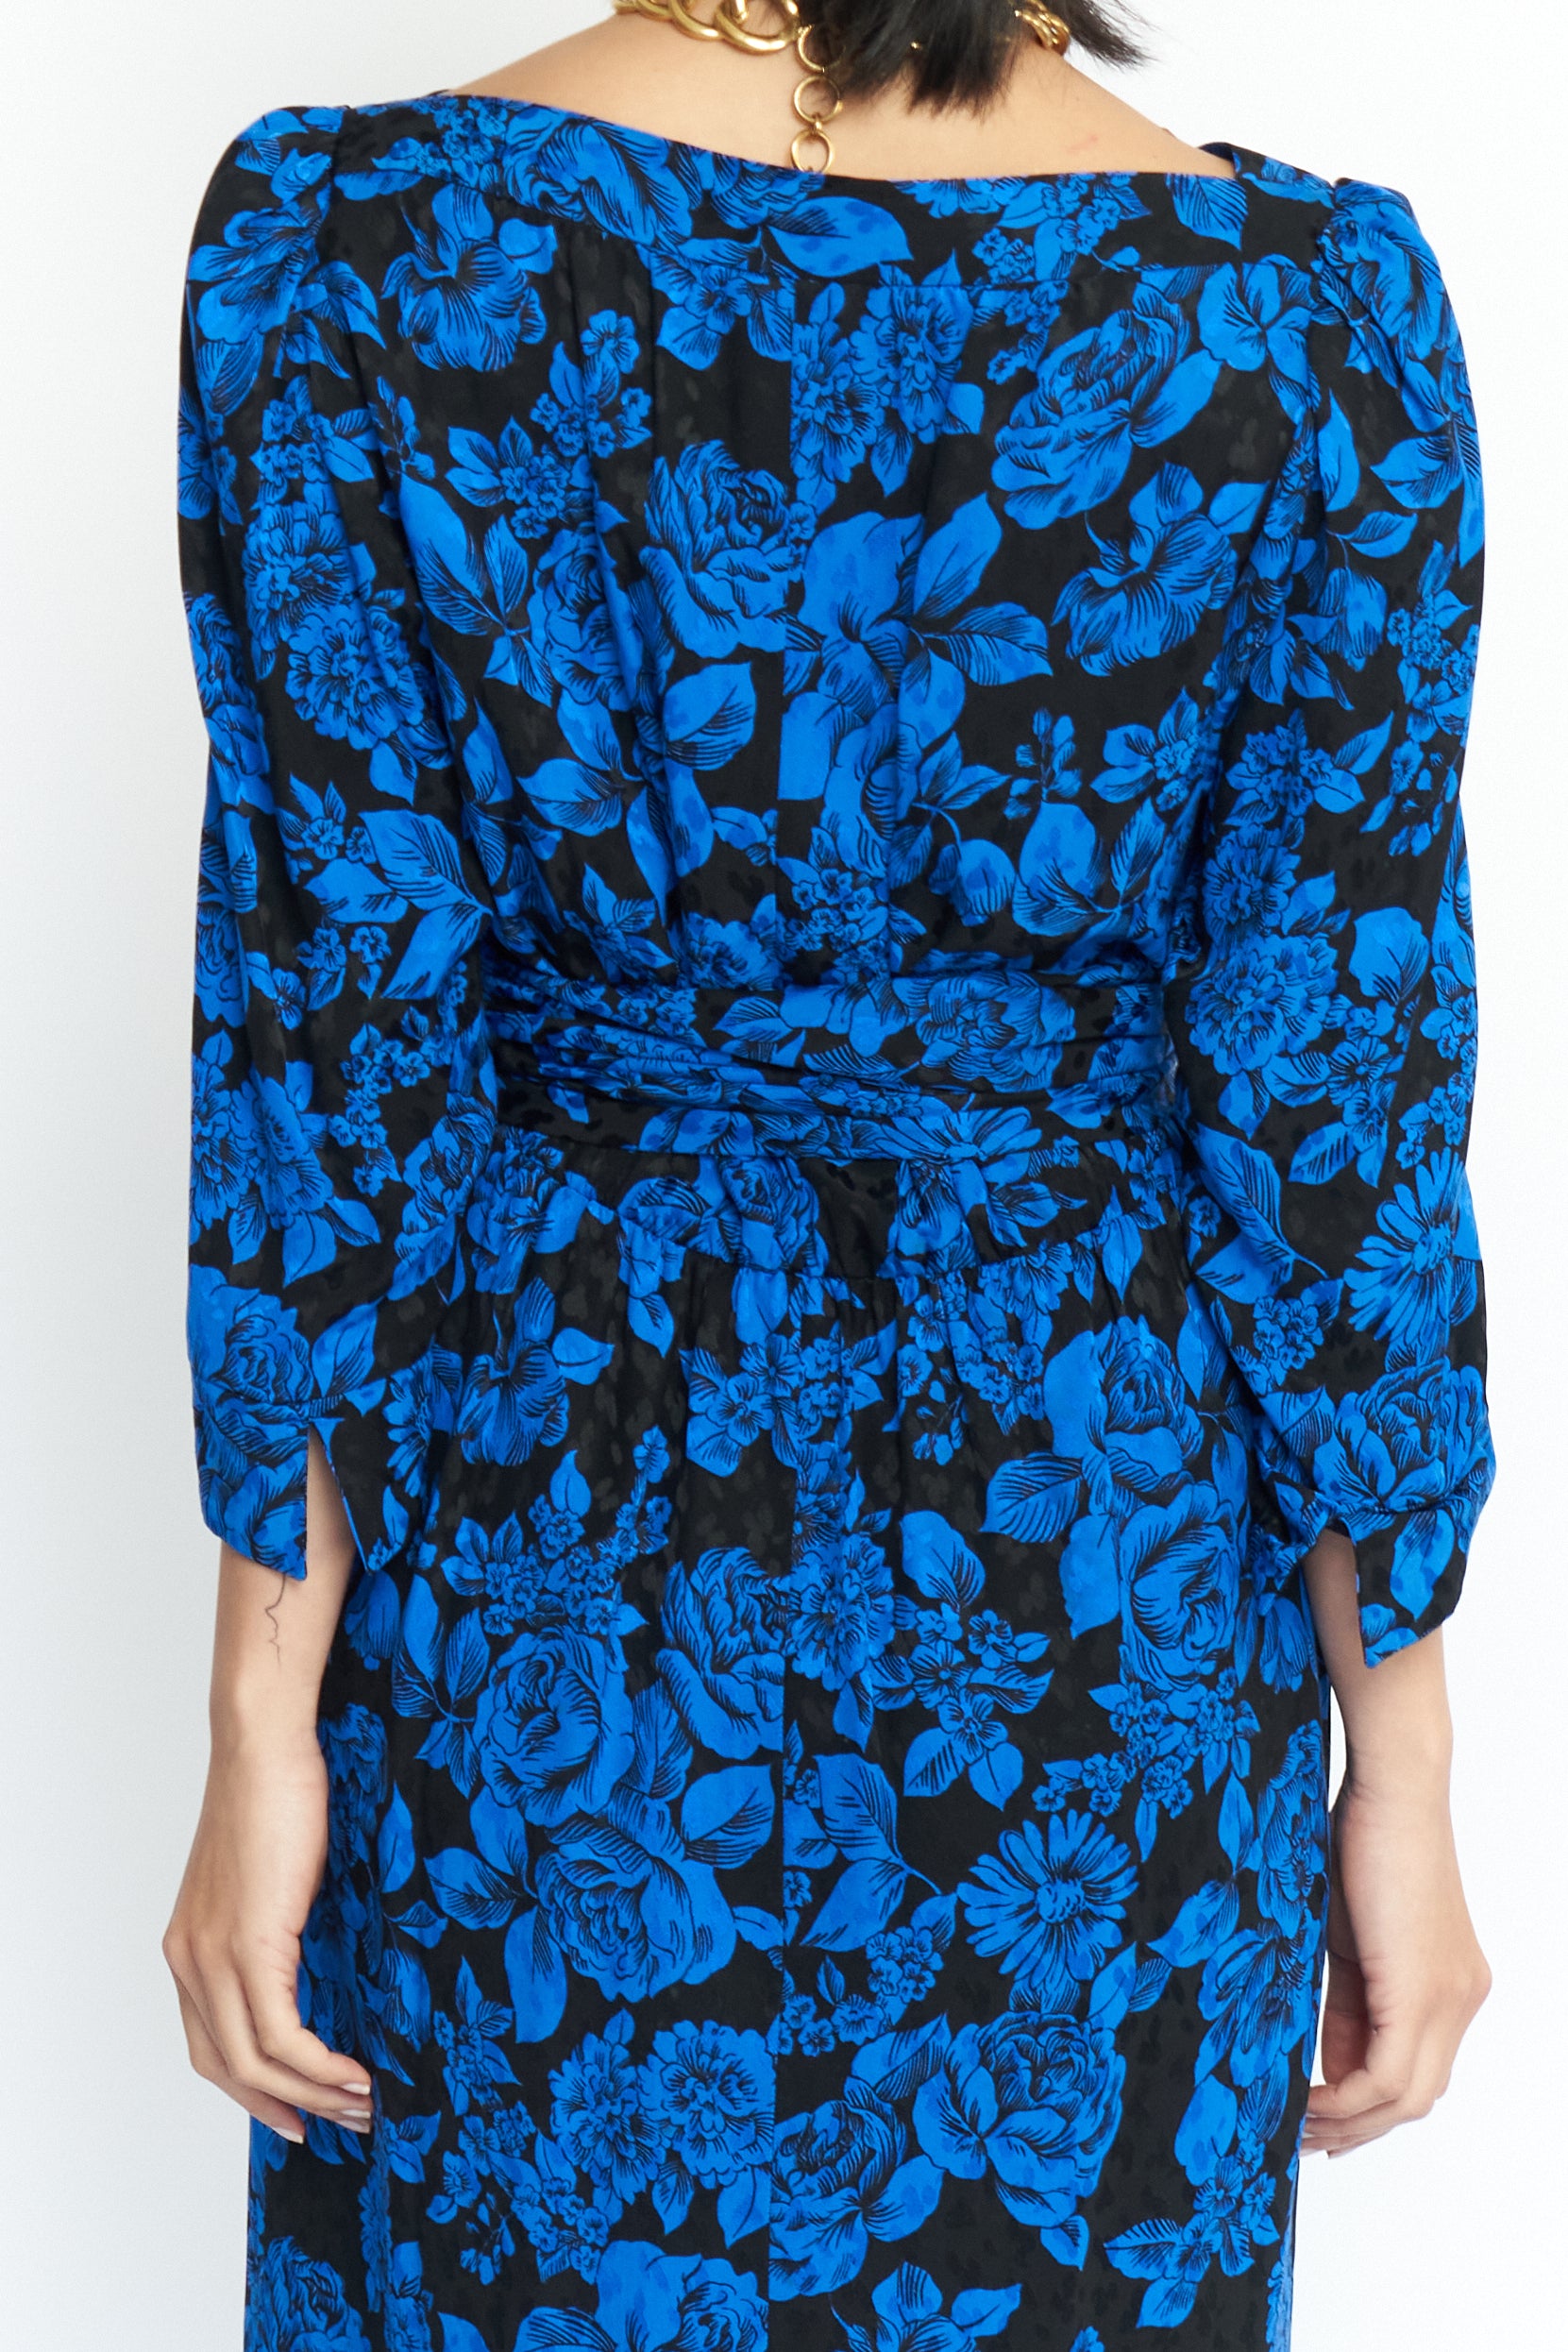 Yves Saint Laurent <br> 1980's floral print silk dress